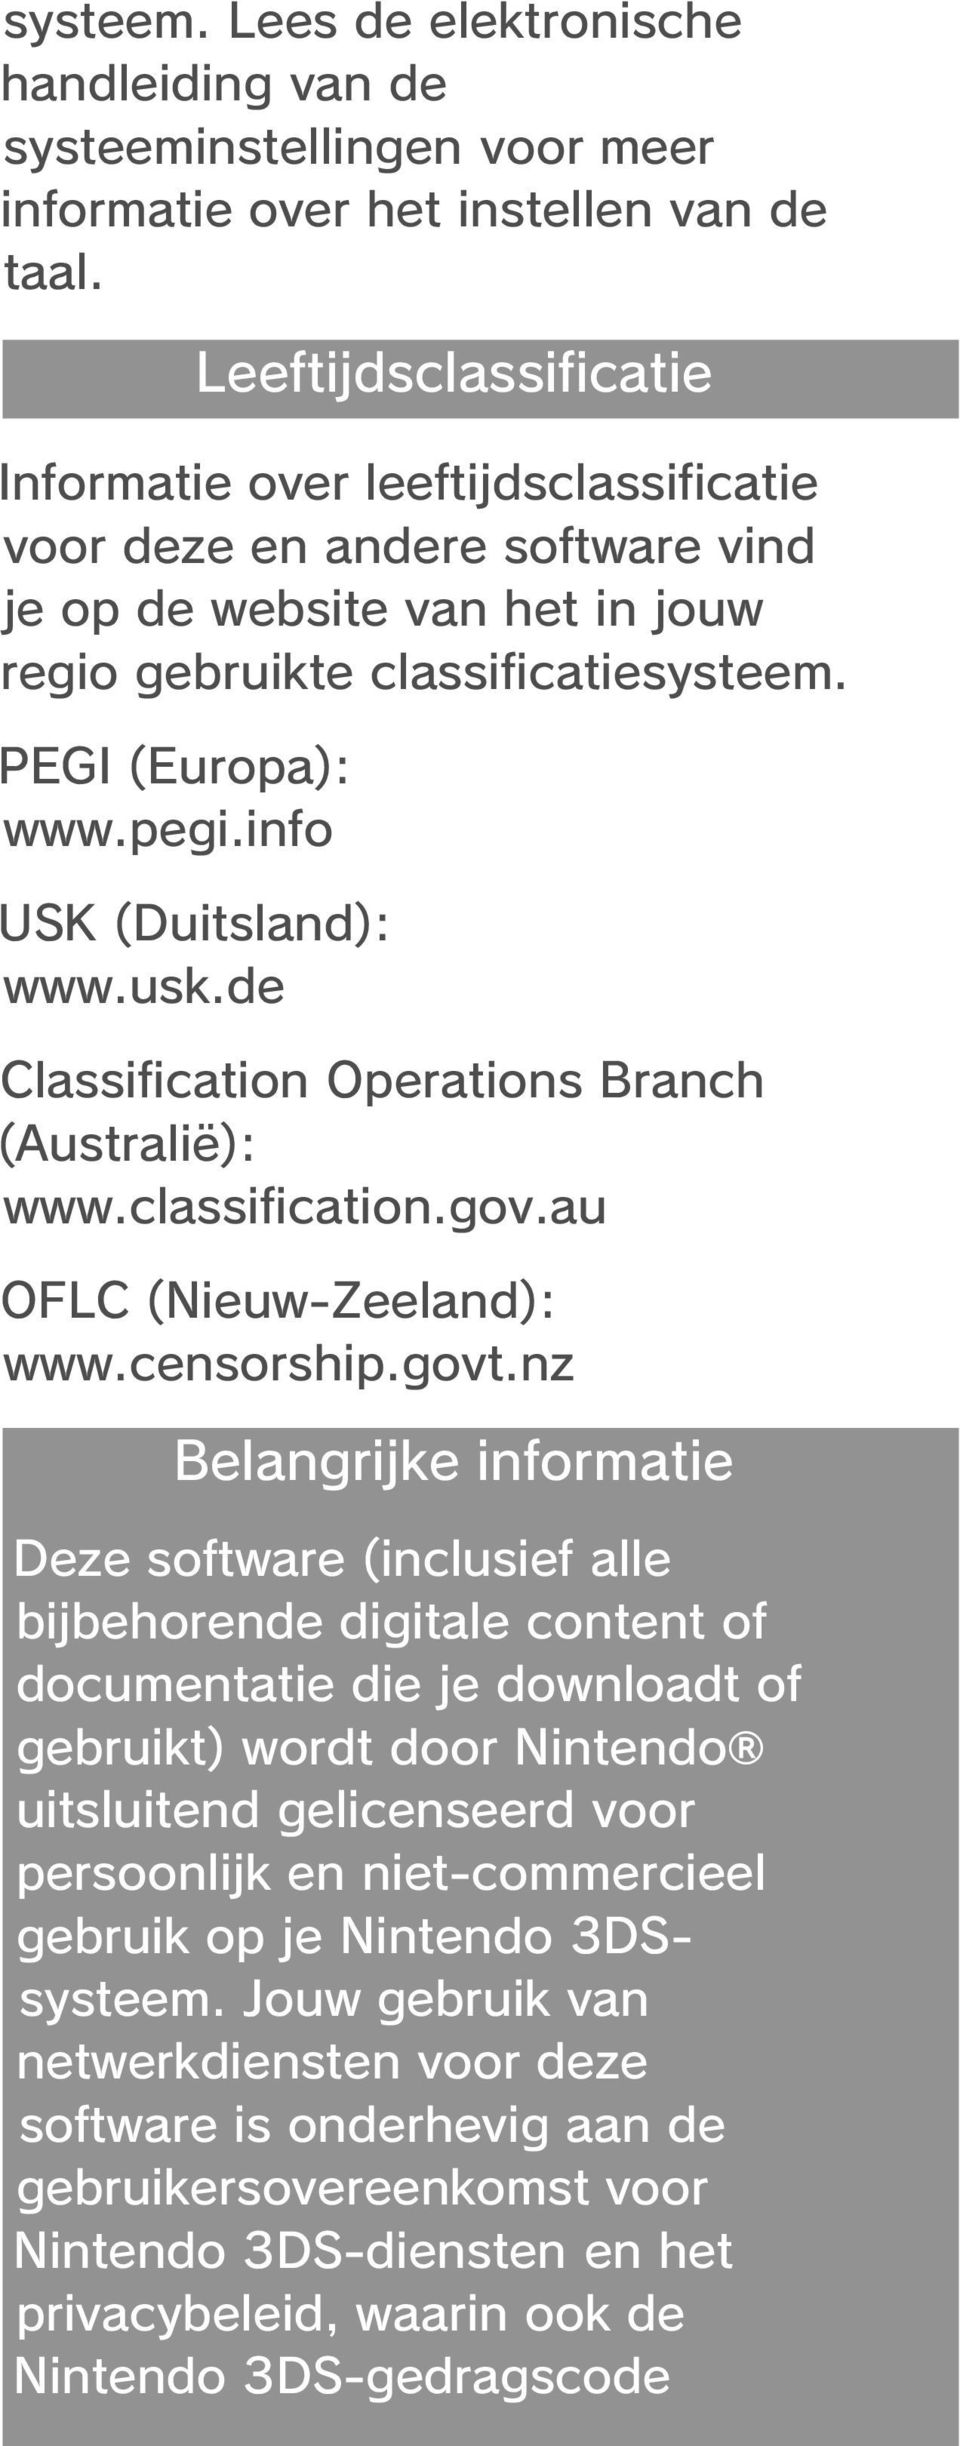 de Leeftijdsclassificatie Classification Operations Branch (Australië): www.classification.gov.au OFLC (Nieuw-Zeeland): www.censorship.govt.